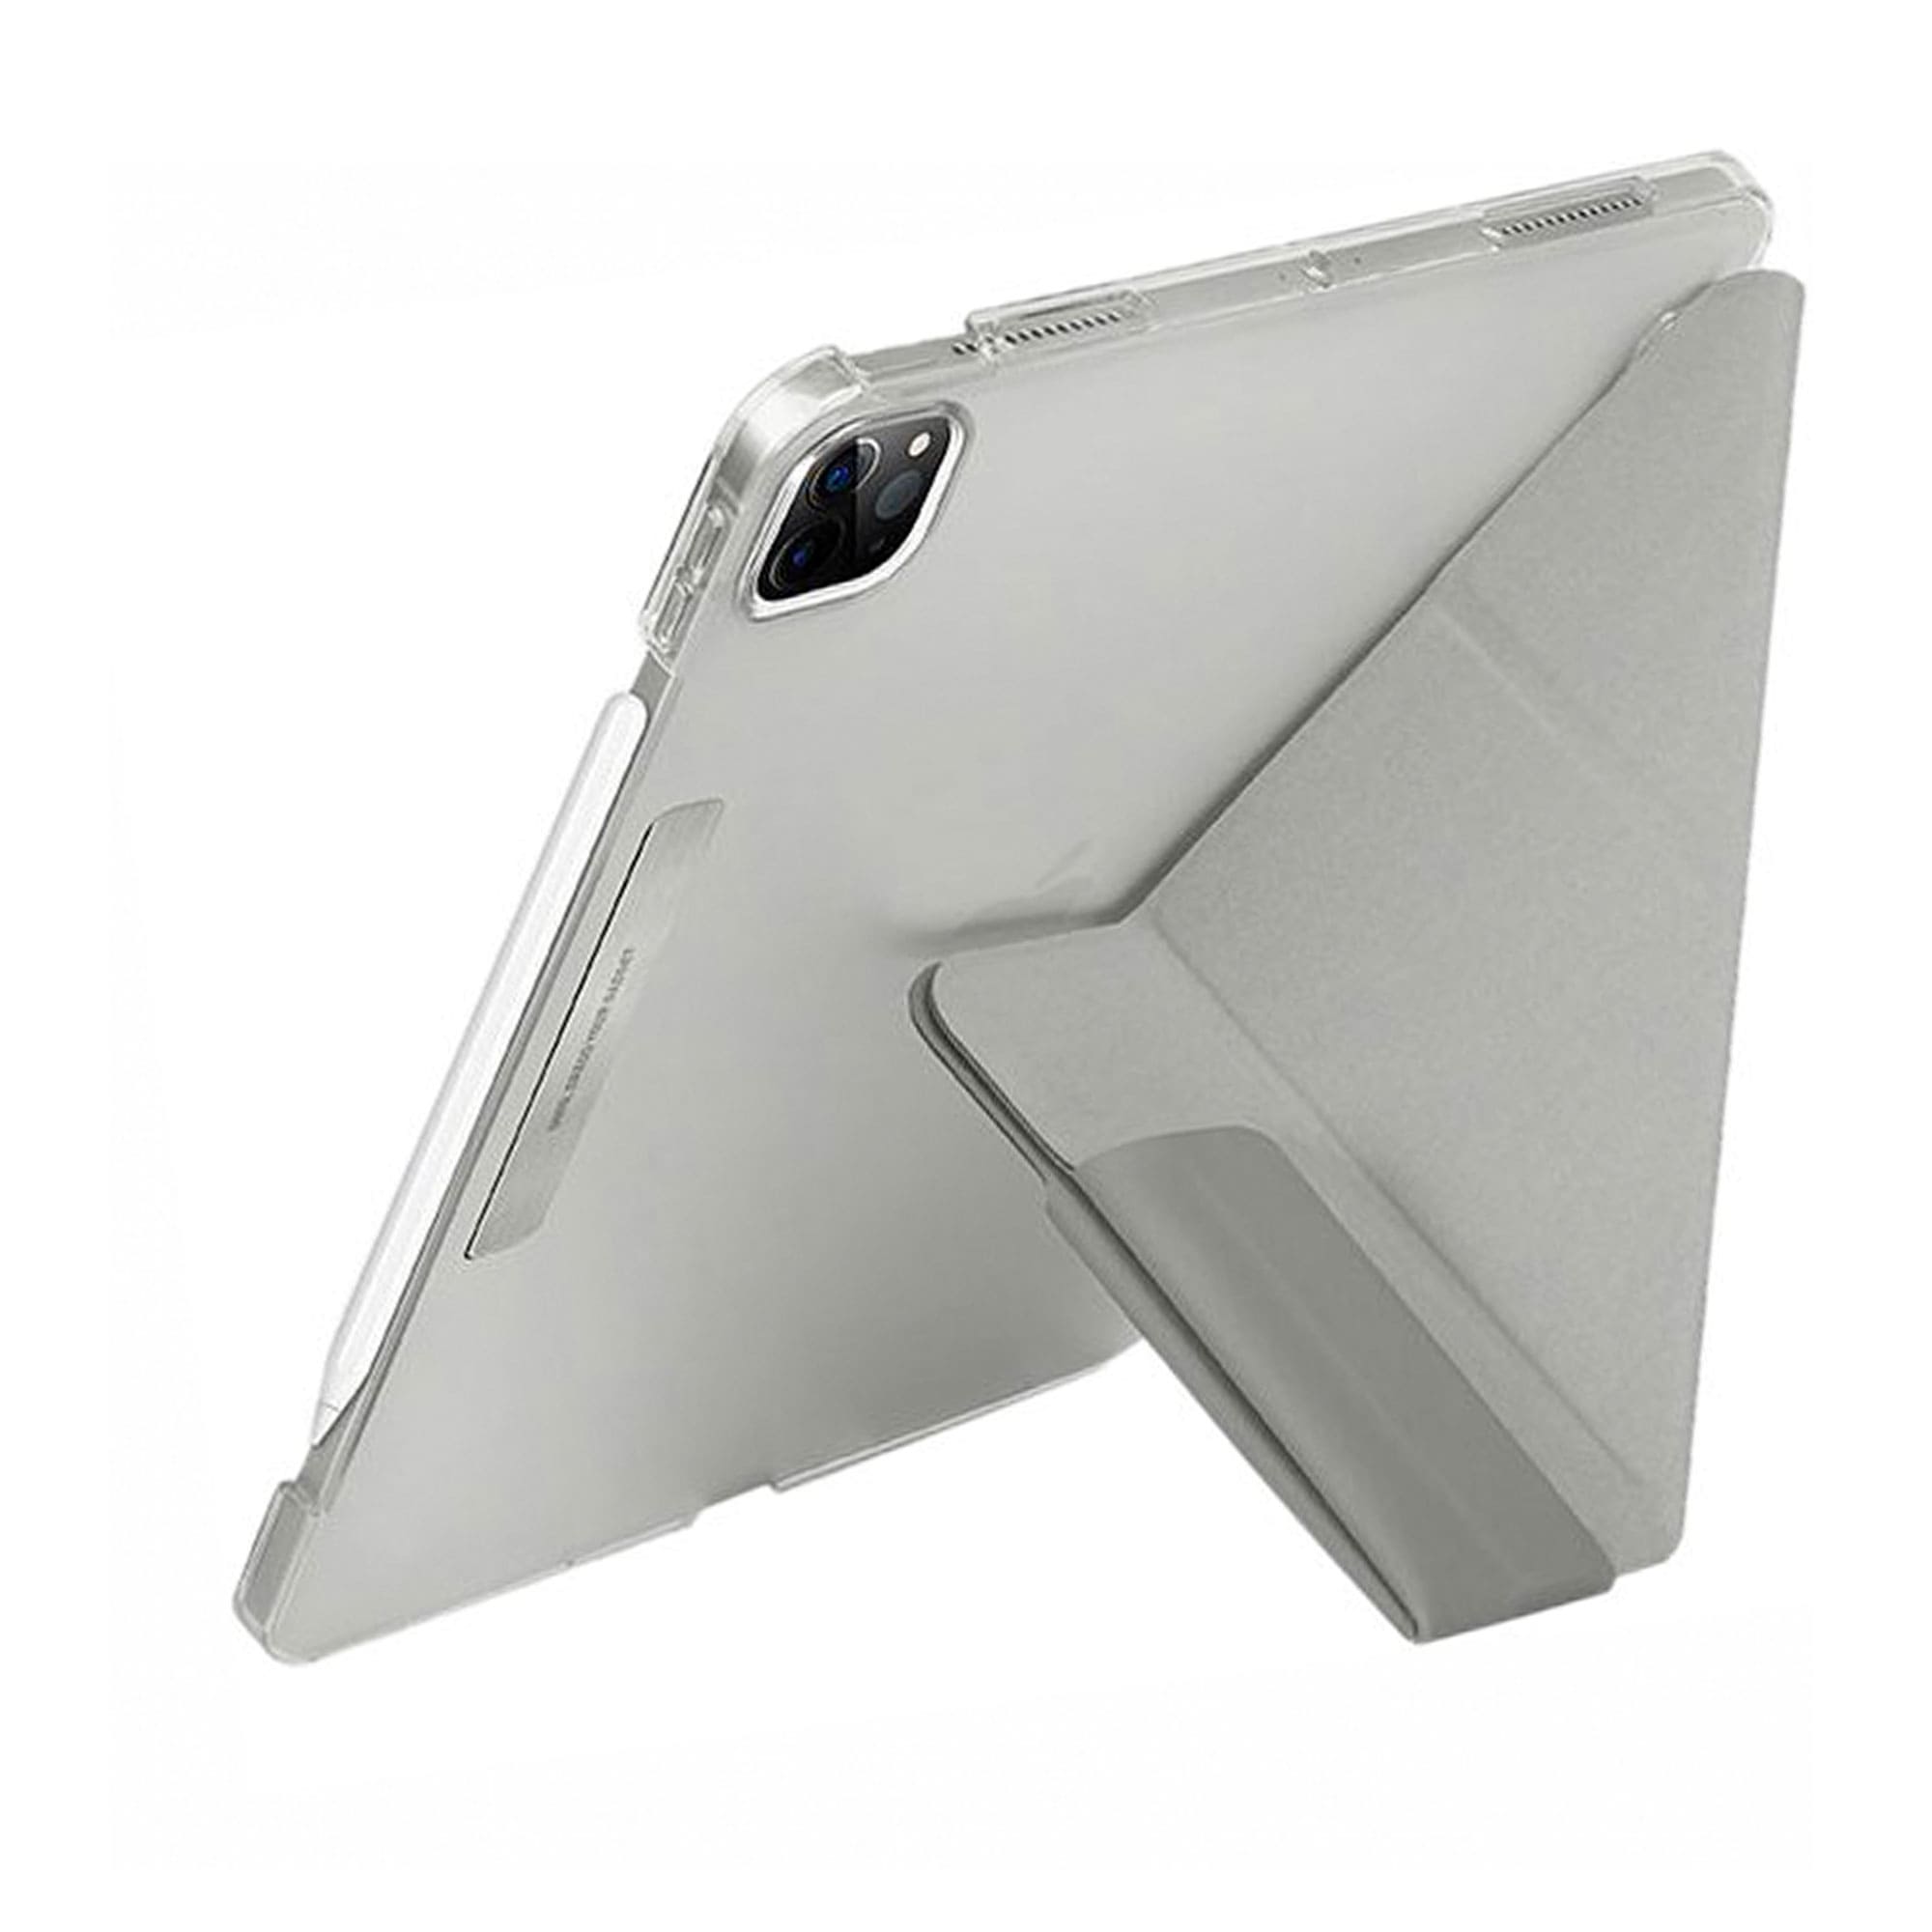 Чехол для планшета Uniq для iPad Pro 11 (2021/20) Camden Anti-microbial, серый